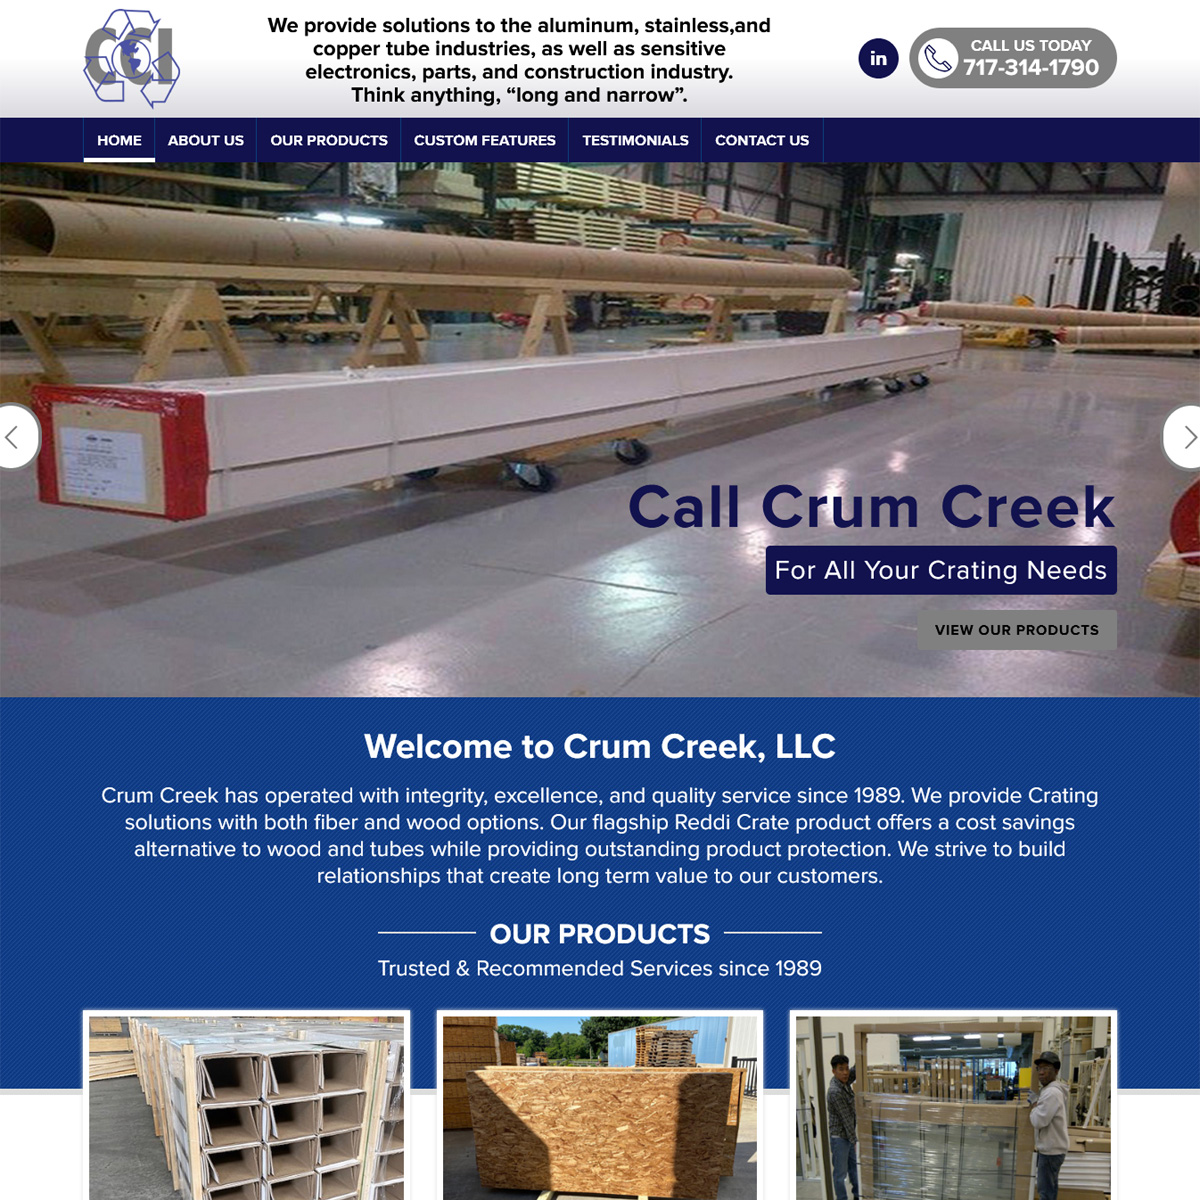 Crum Creek Website Design